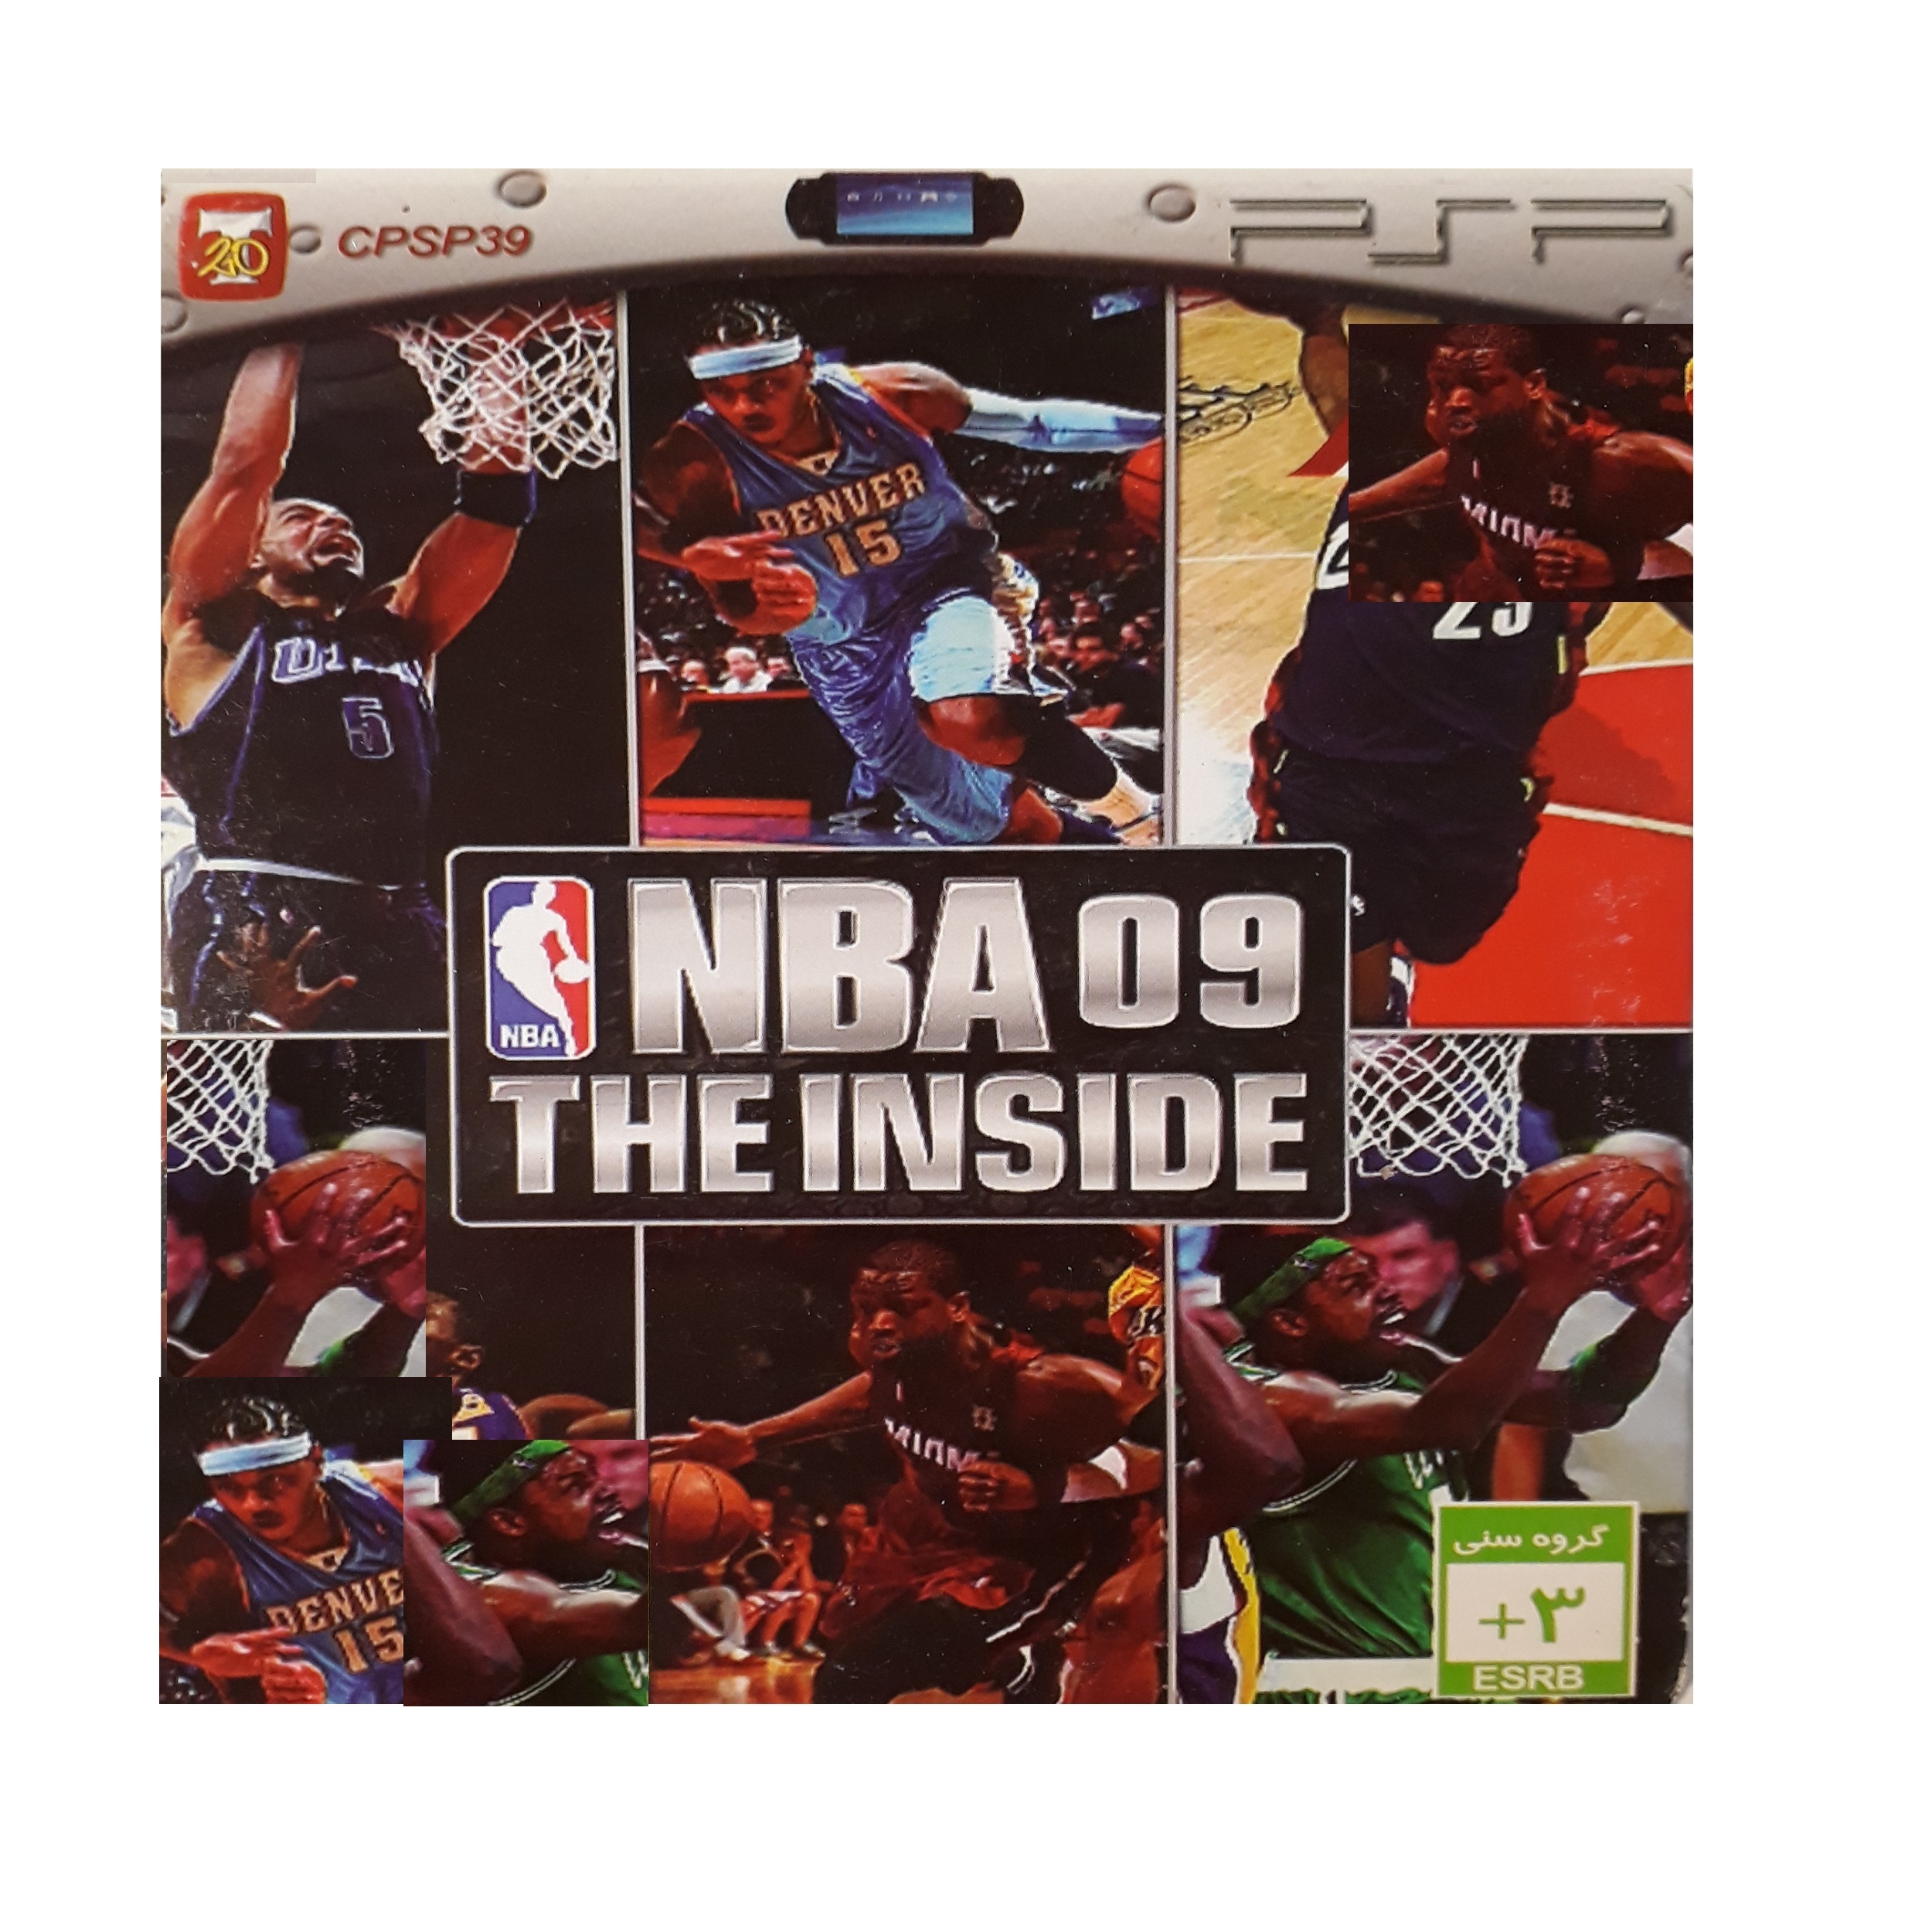 بازی NBA 09 the inside  مخصوص psp